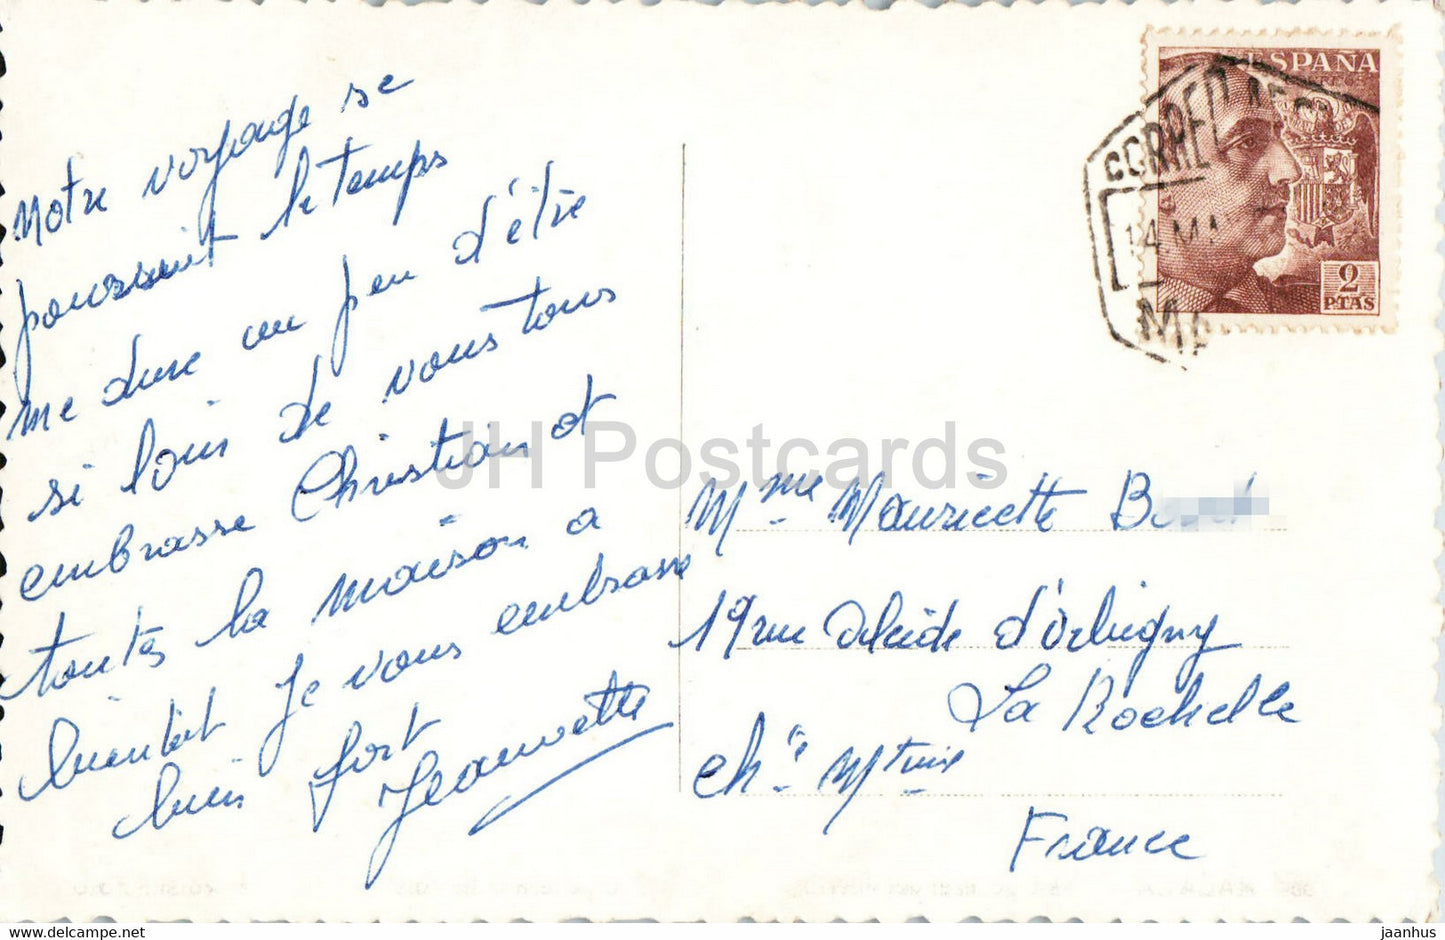 Malaga - Vista general del Puerto - Vue generale du Port - 354 - alte Postkarte - Spanien - gebraucht